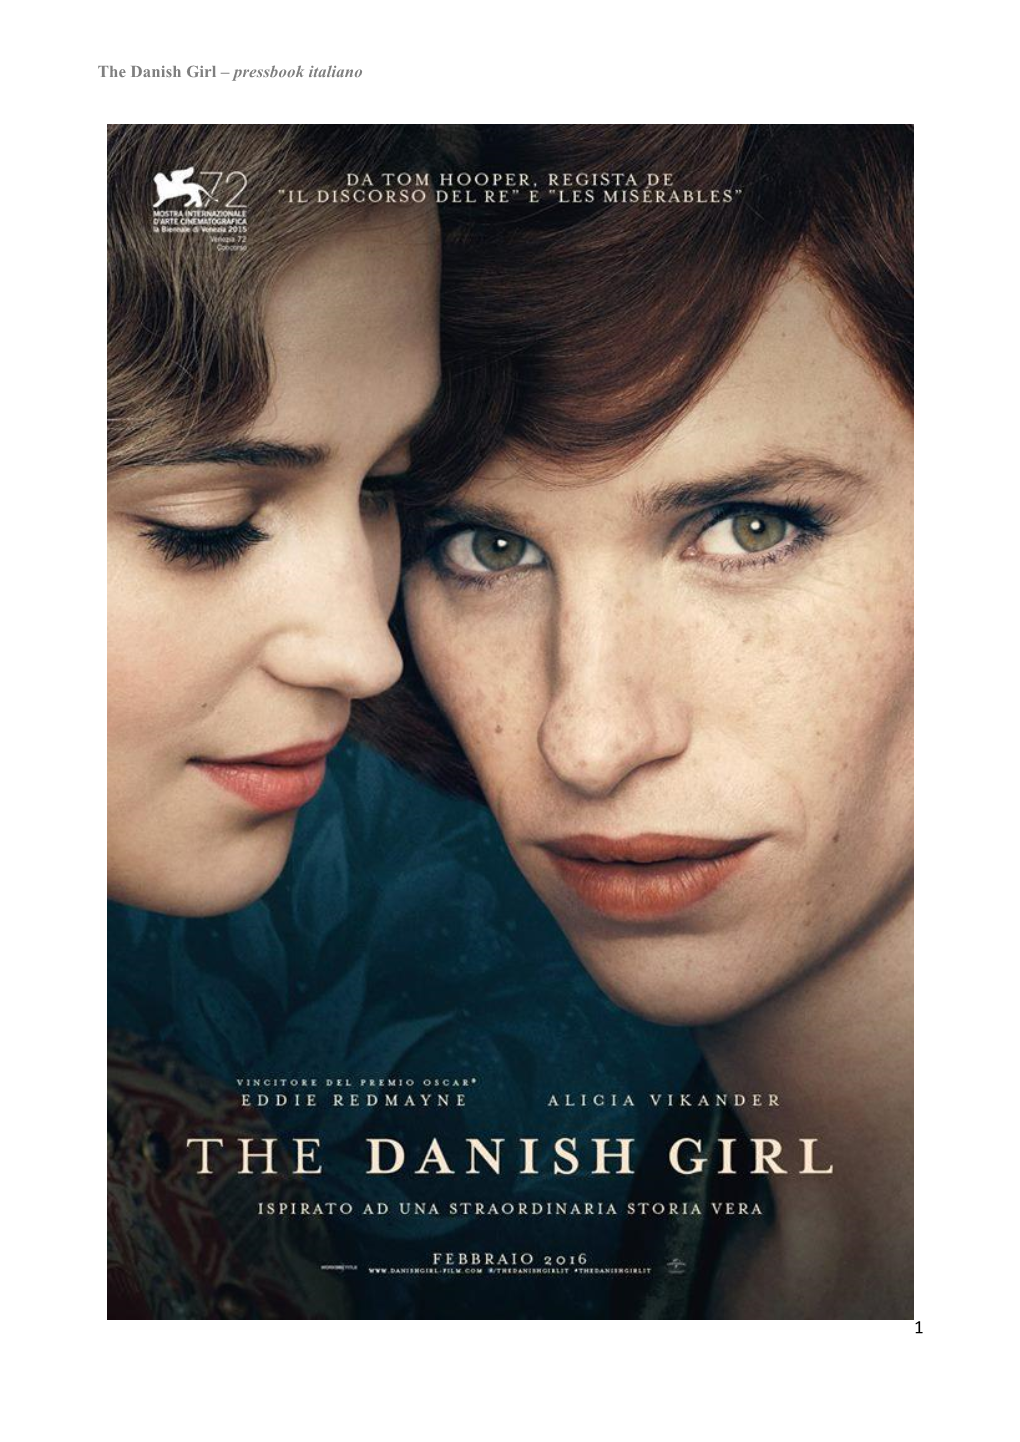 The Danish Girl – Pressbook Italiano